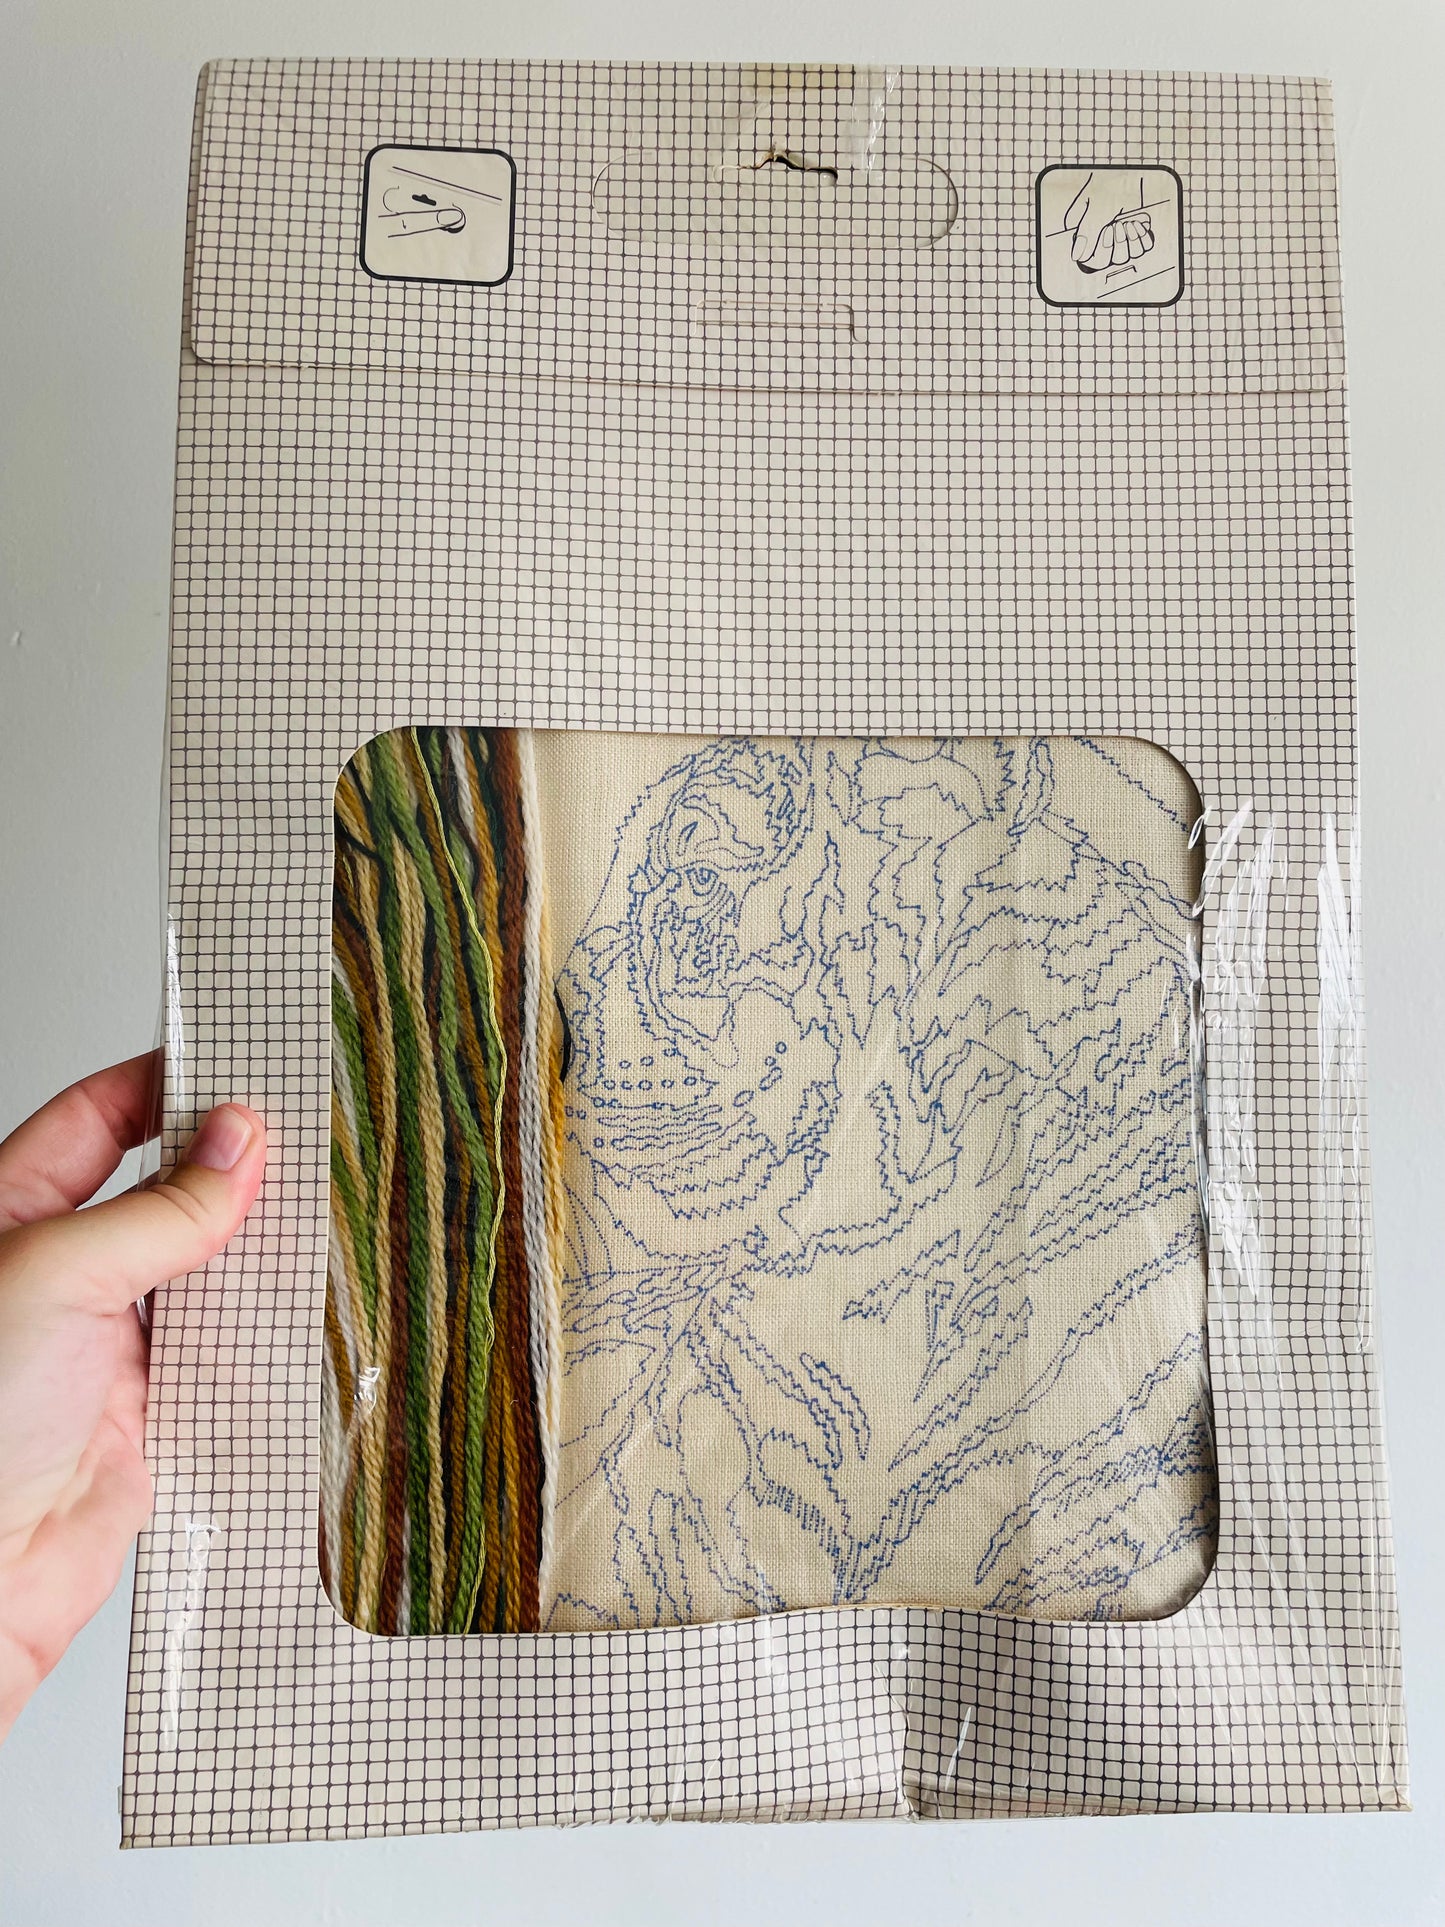 Bucilla Stitchery Needlework Embroidery Kit - Tiger's Haven